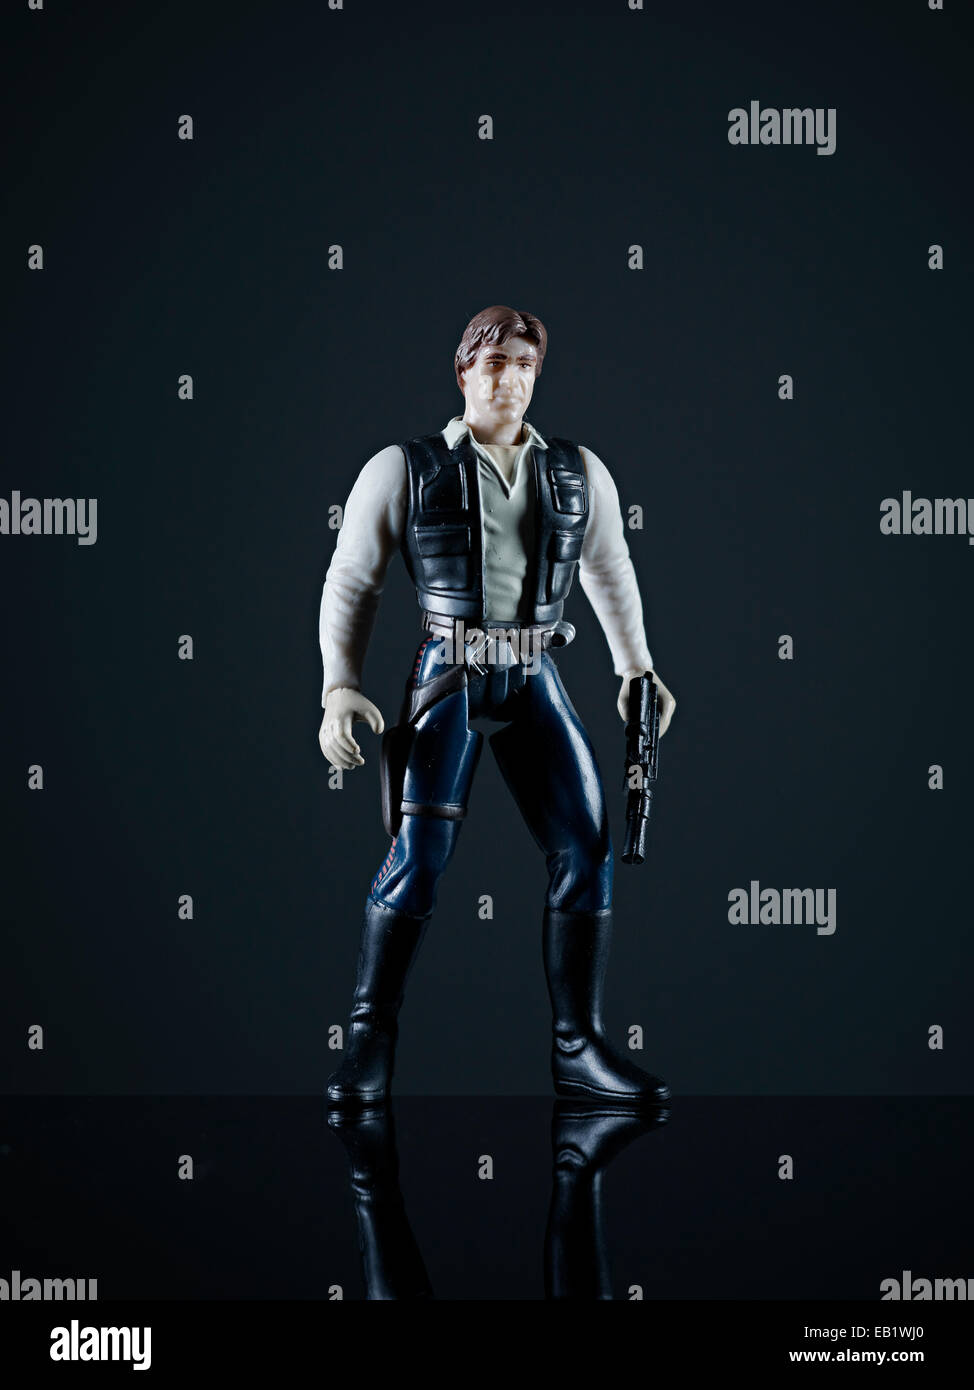 Luke Skywalker star wars studio portrait photograph of action figure Stock Photo